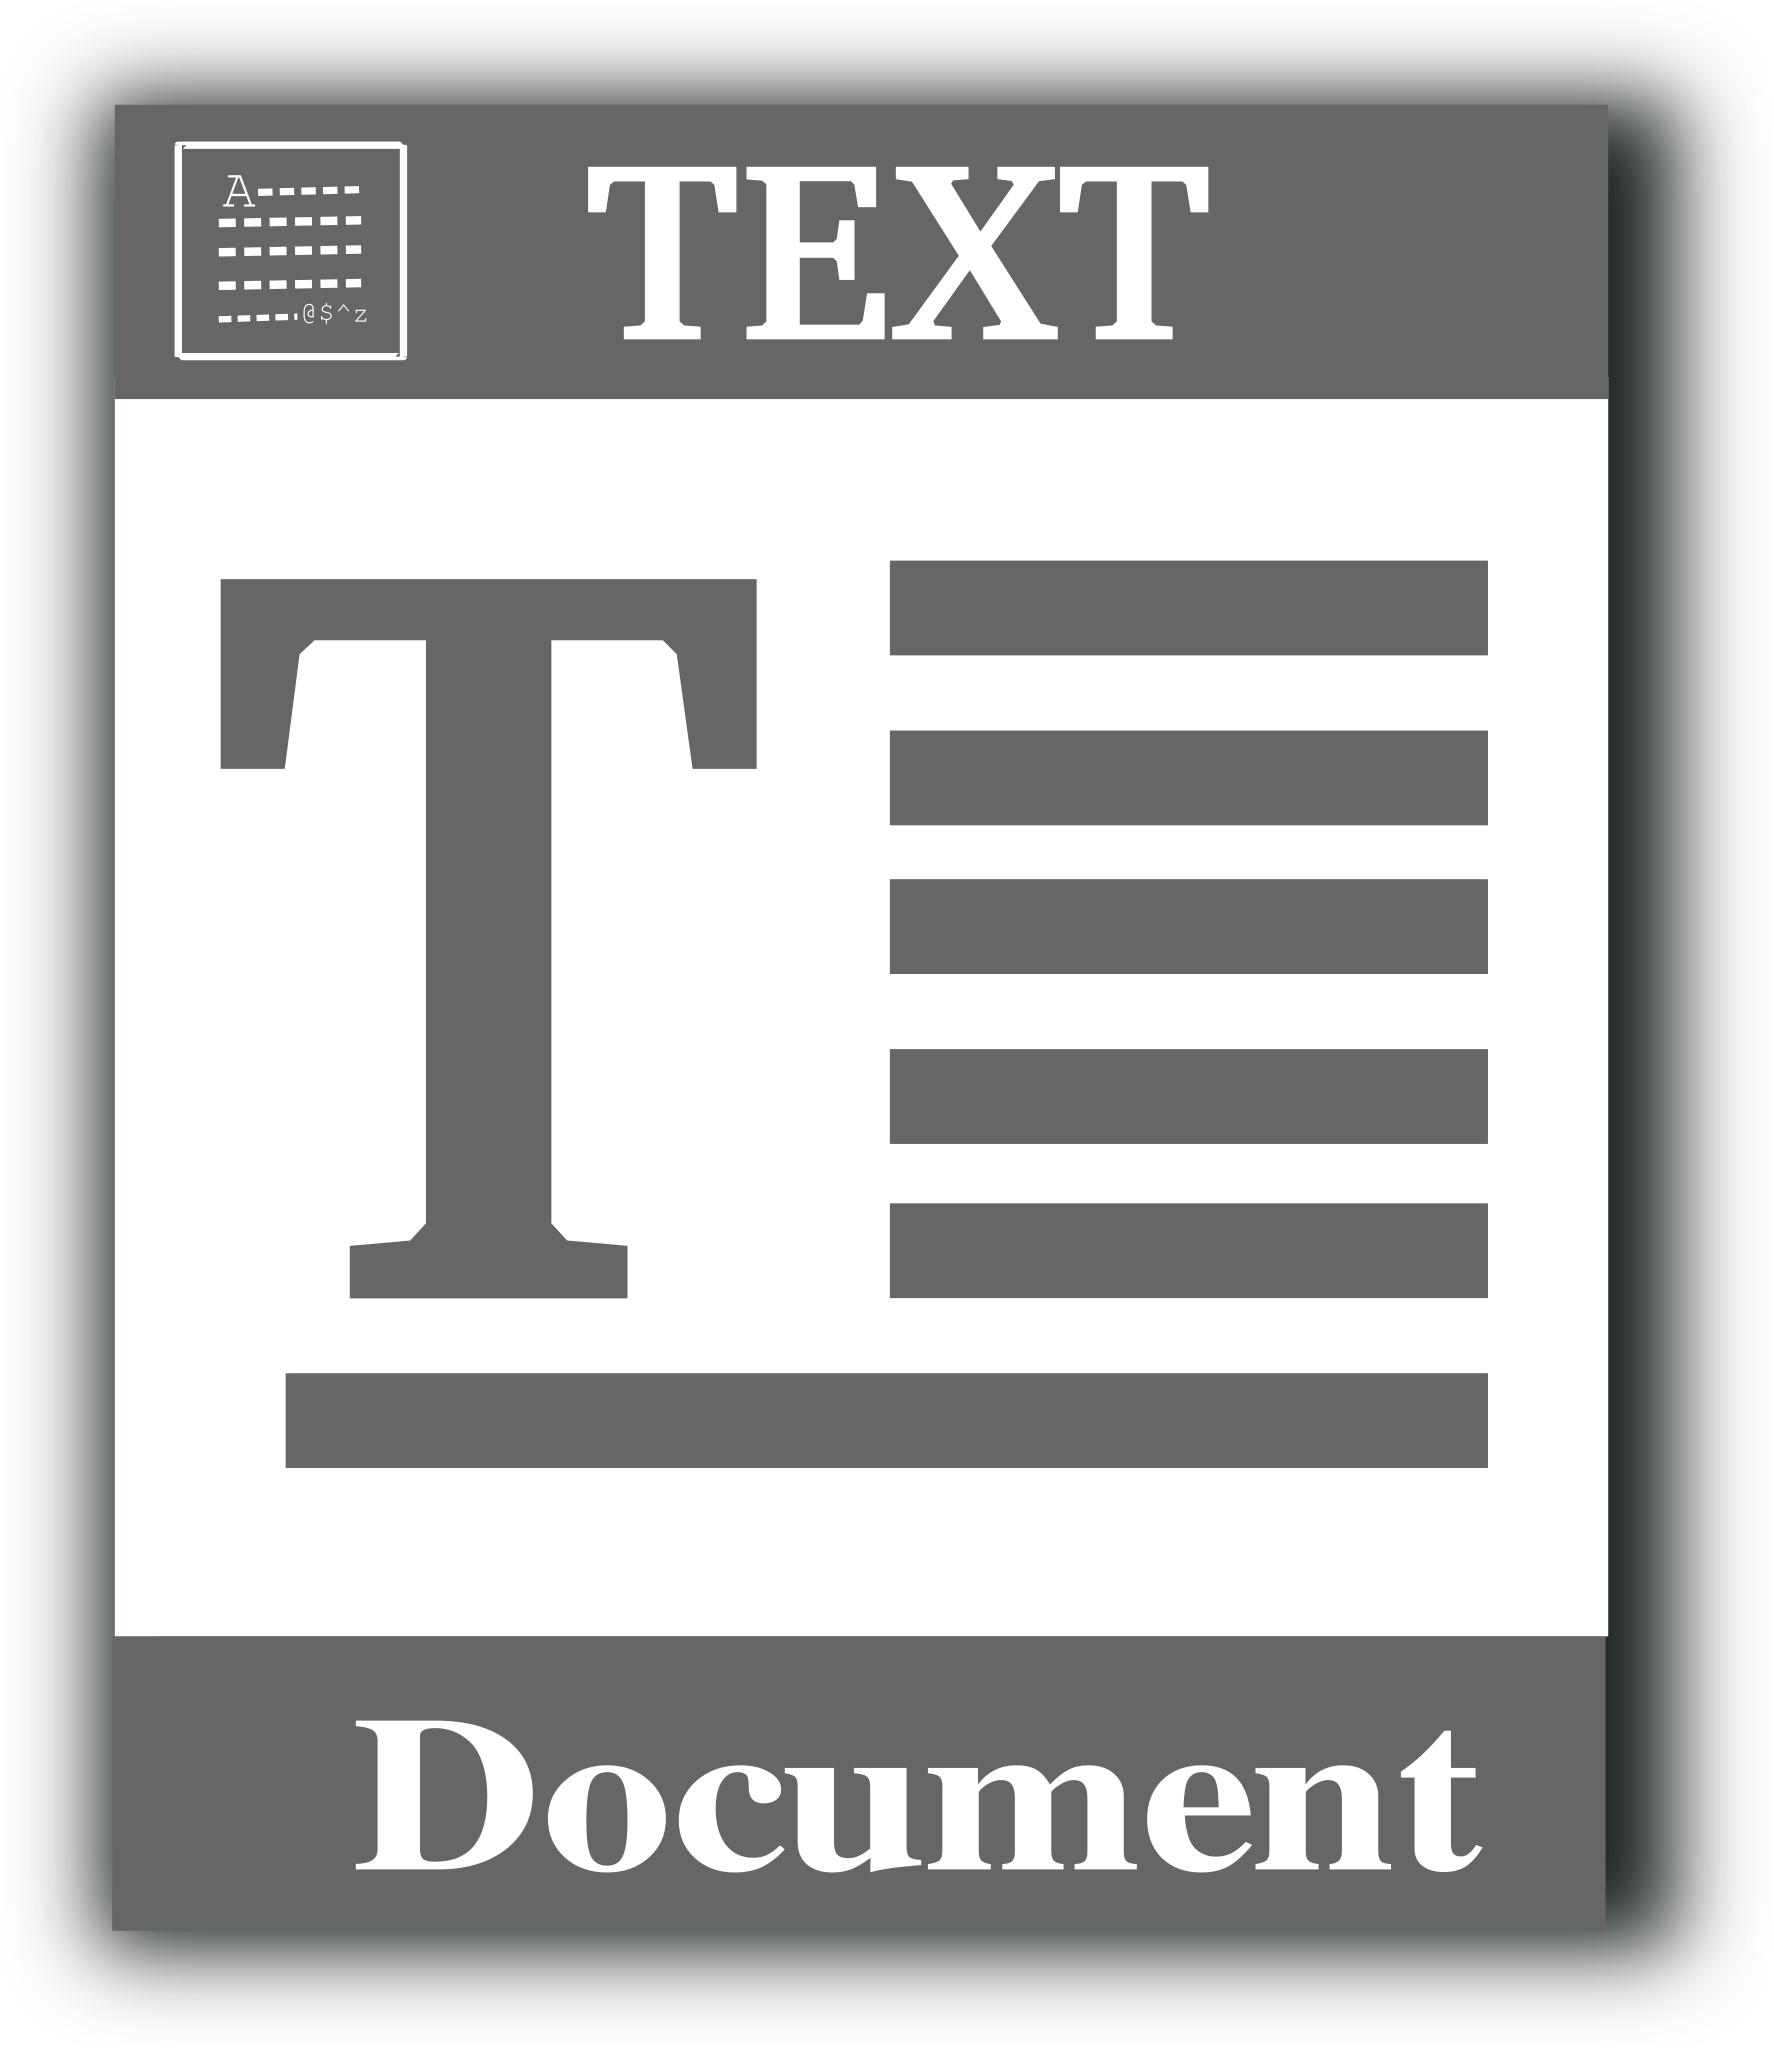 Text file txt. Текстовые иконки. Значки текстовых файлов. Текстовый файл иконка. Текстовый документ значок.